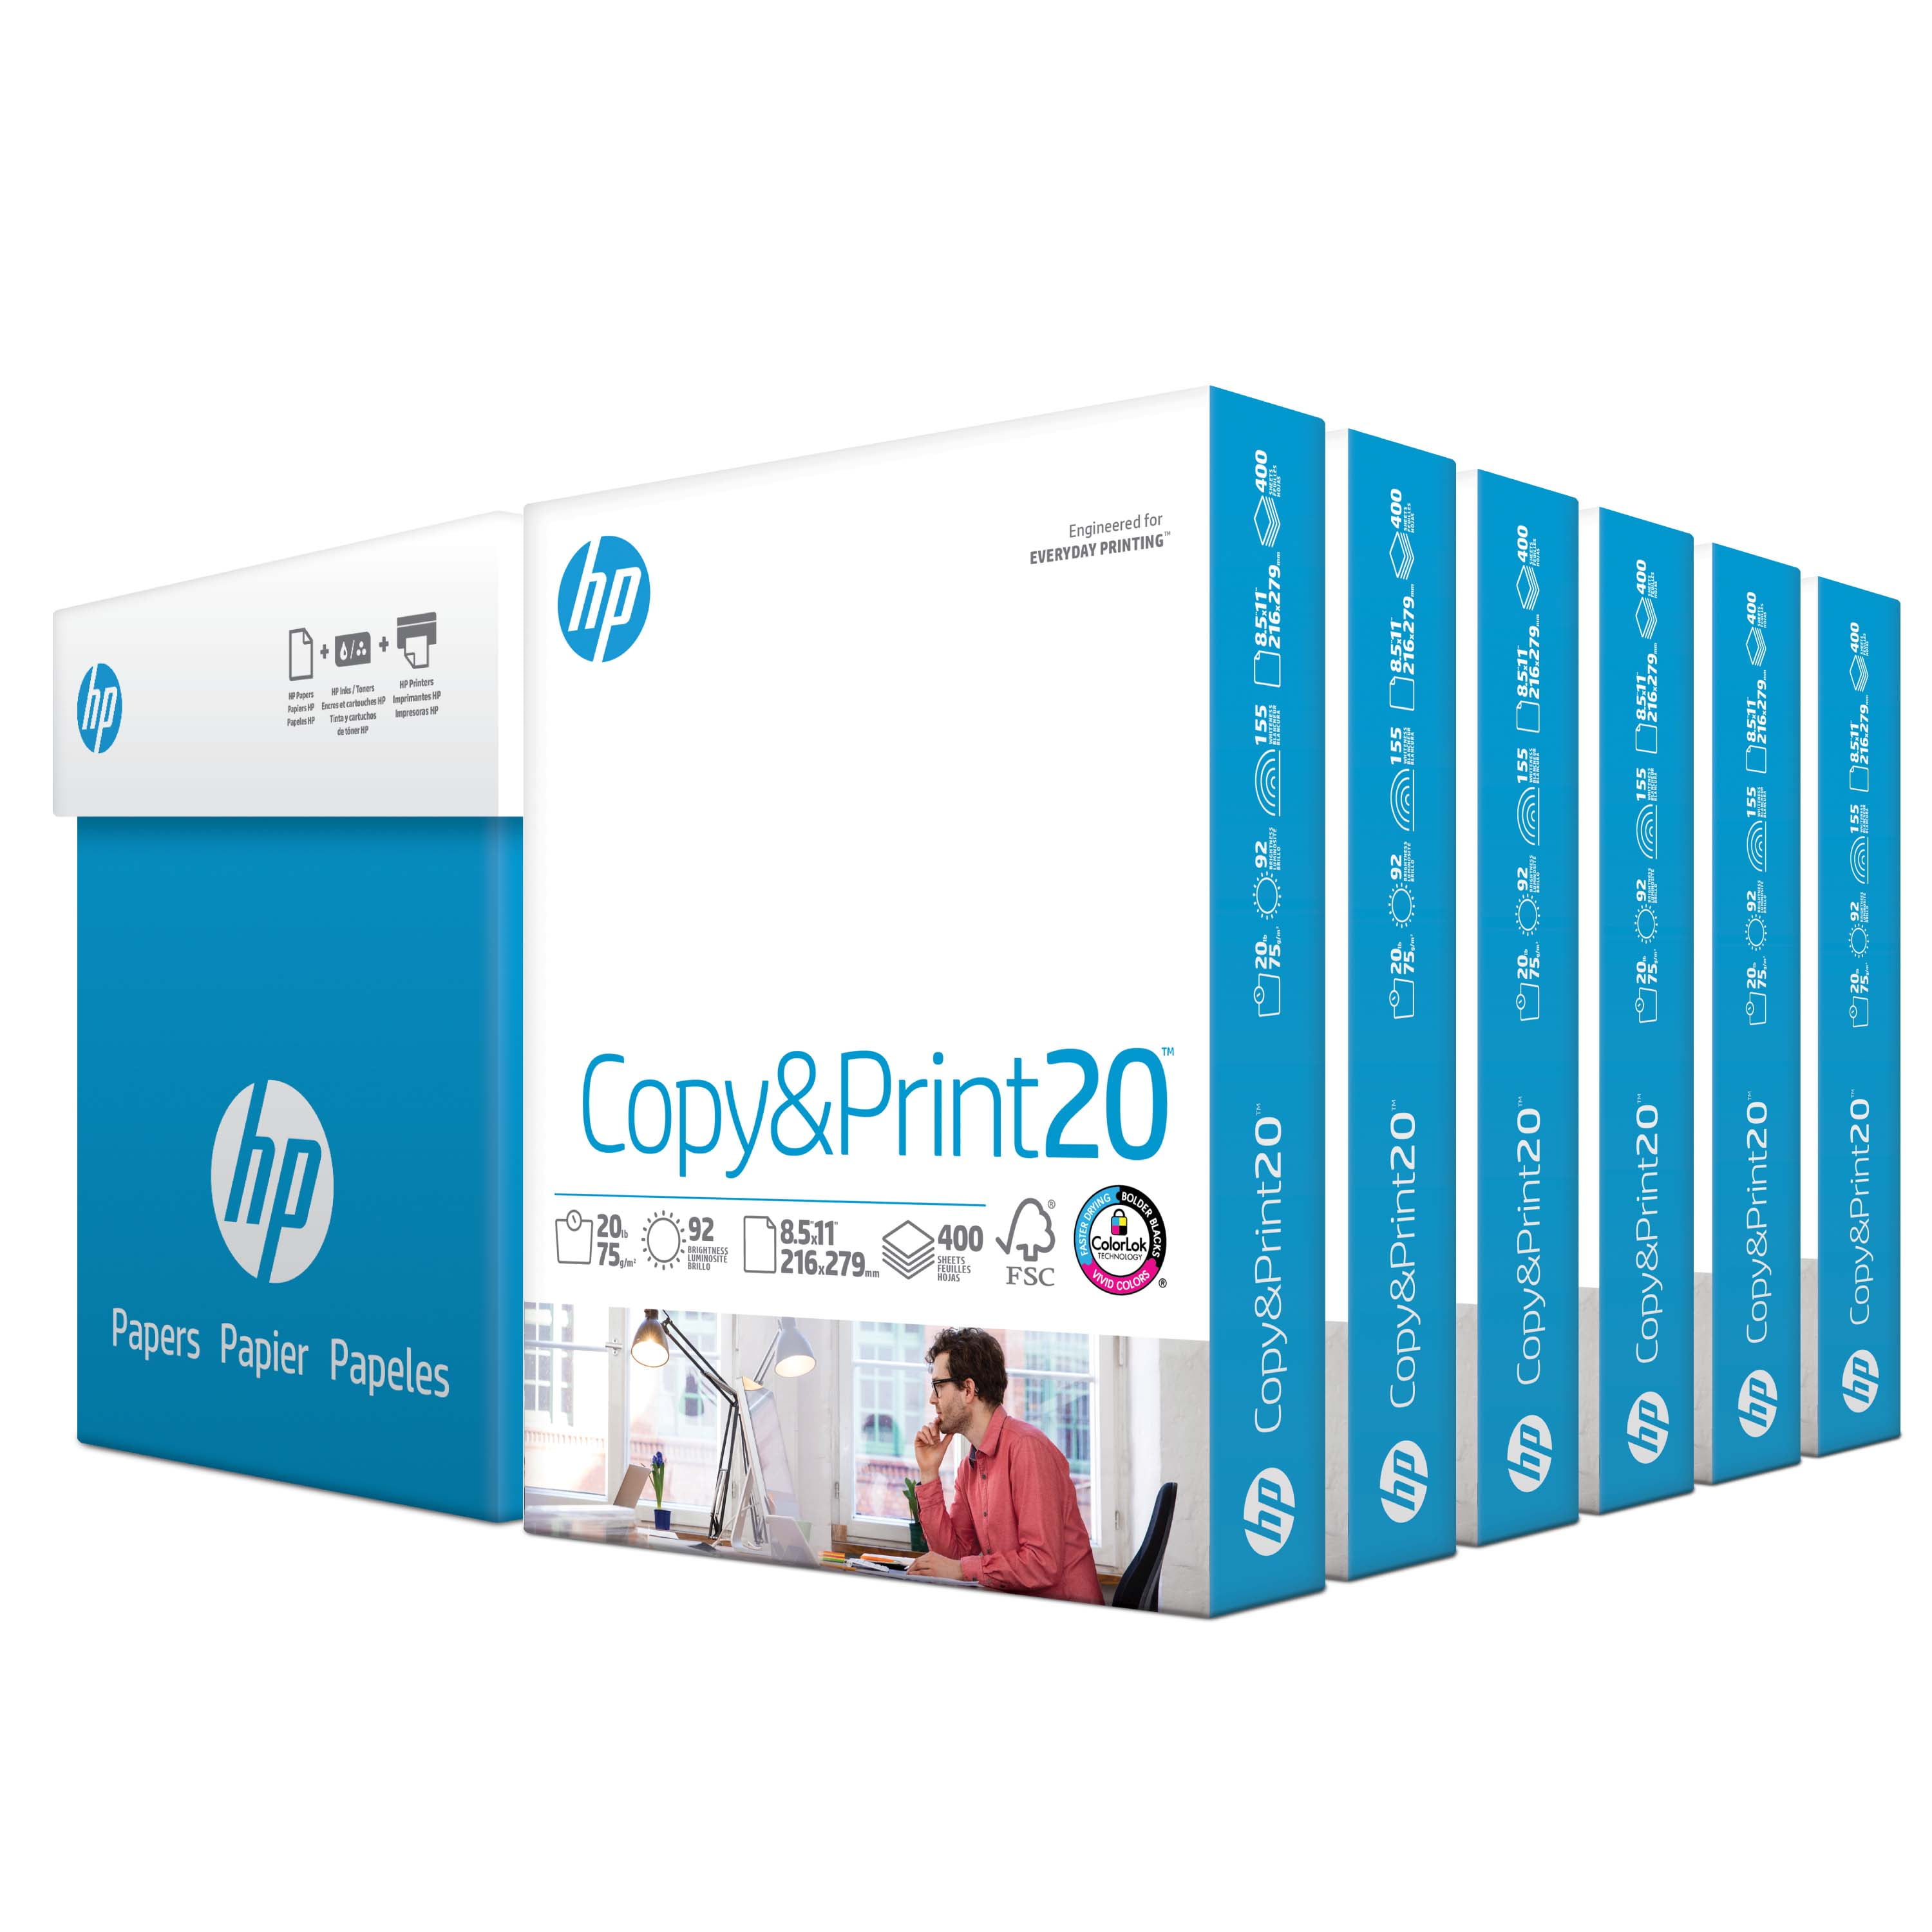 HP Printer Paper Copy&Print 20lb 8.5 x 11 500 Total Sheets Made in US 